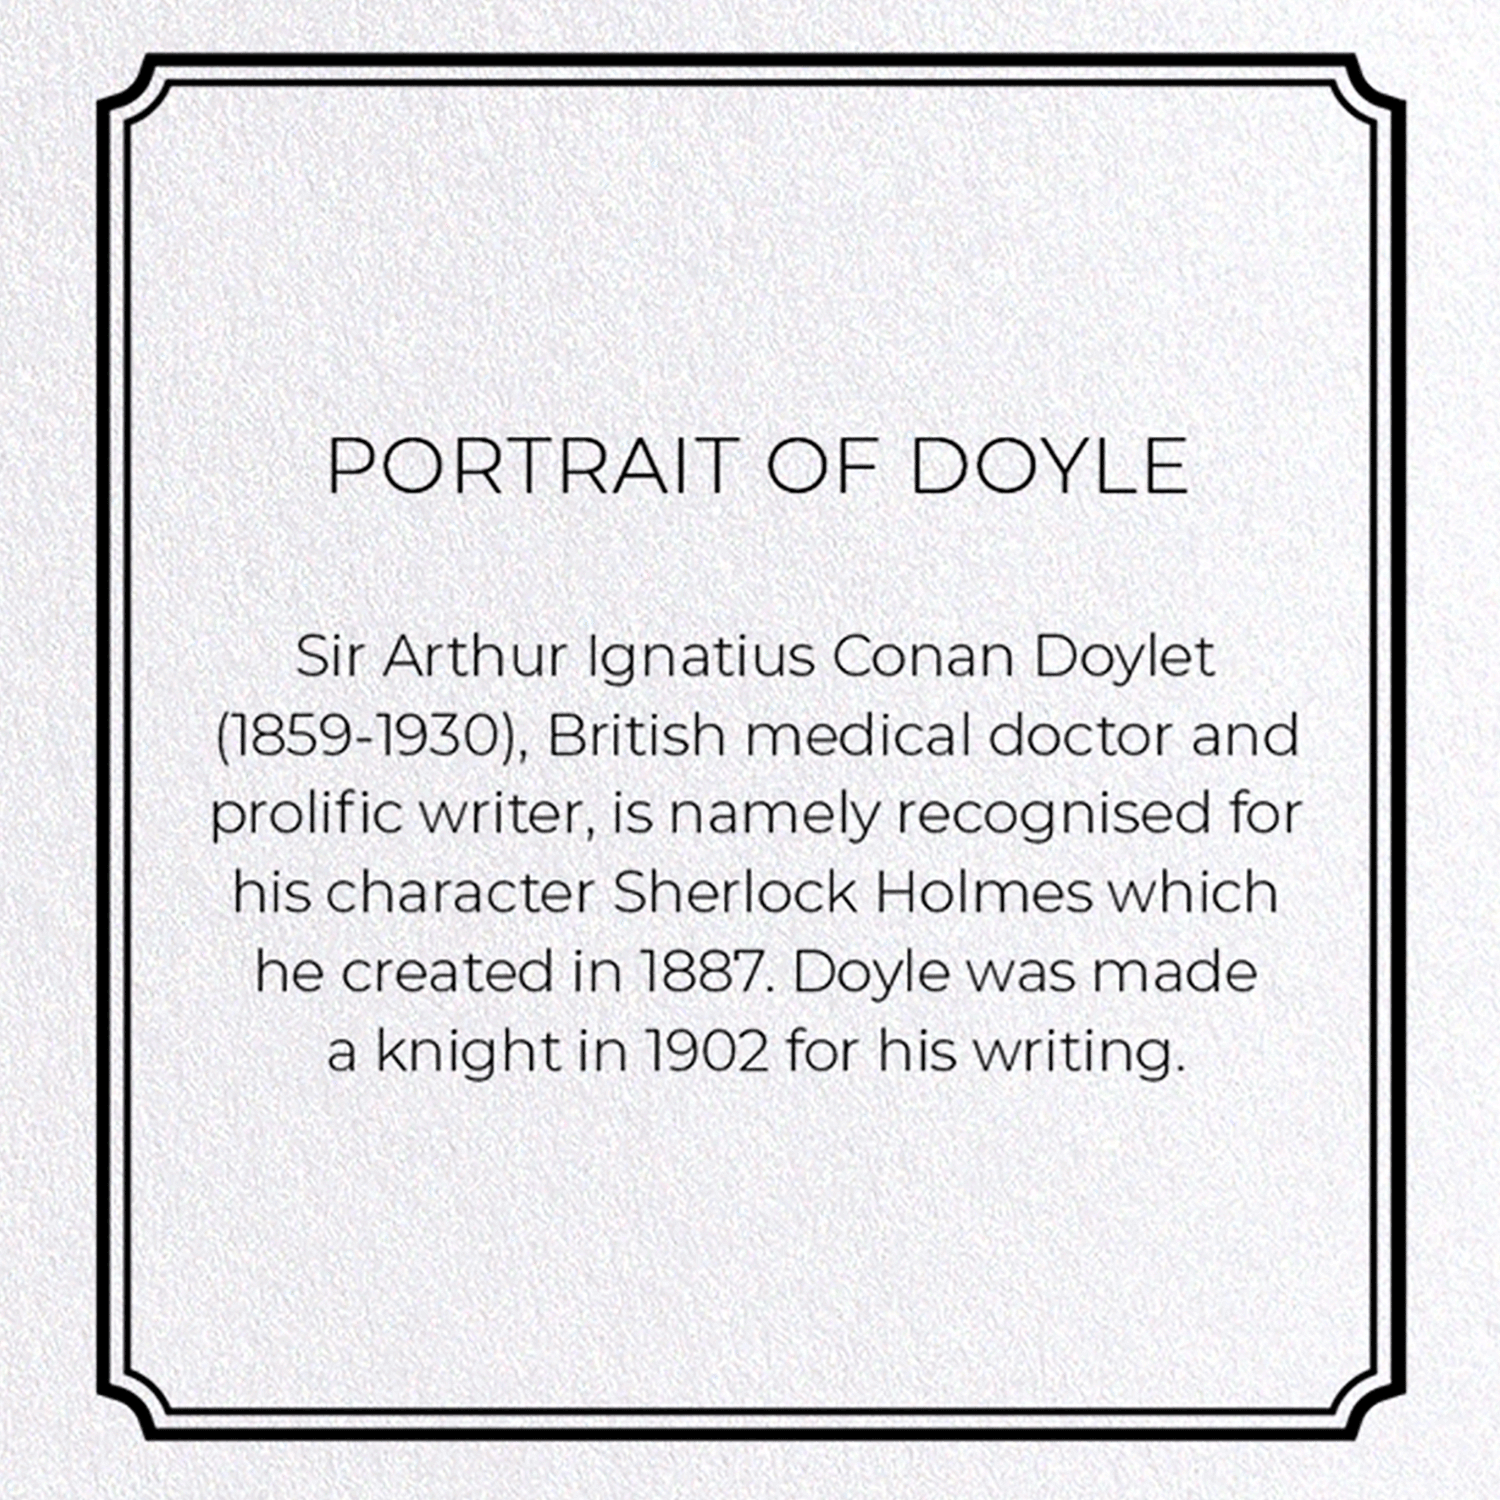 PORTRAIT OF DOYLE